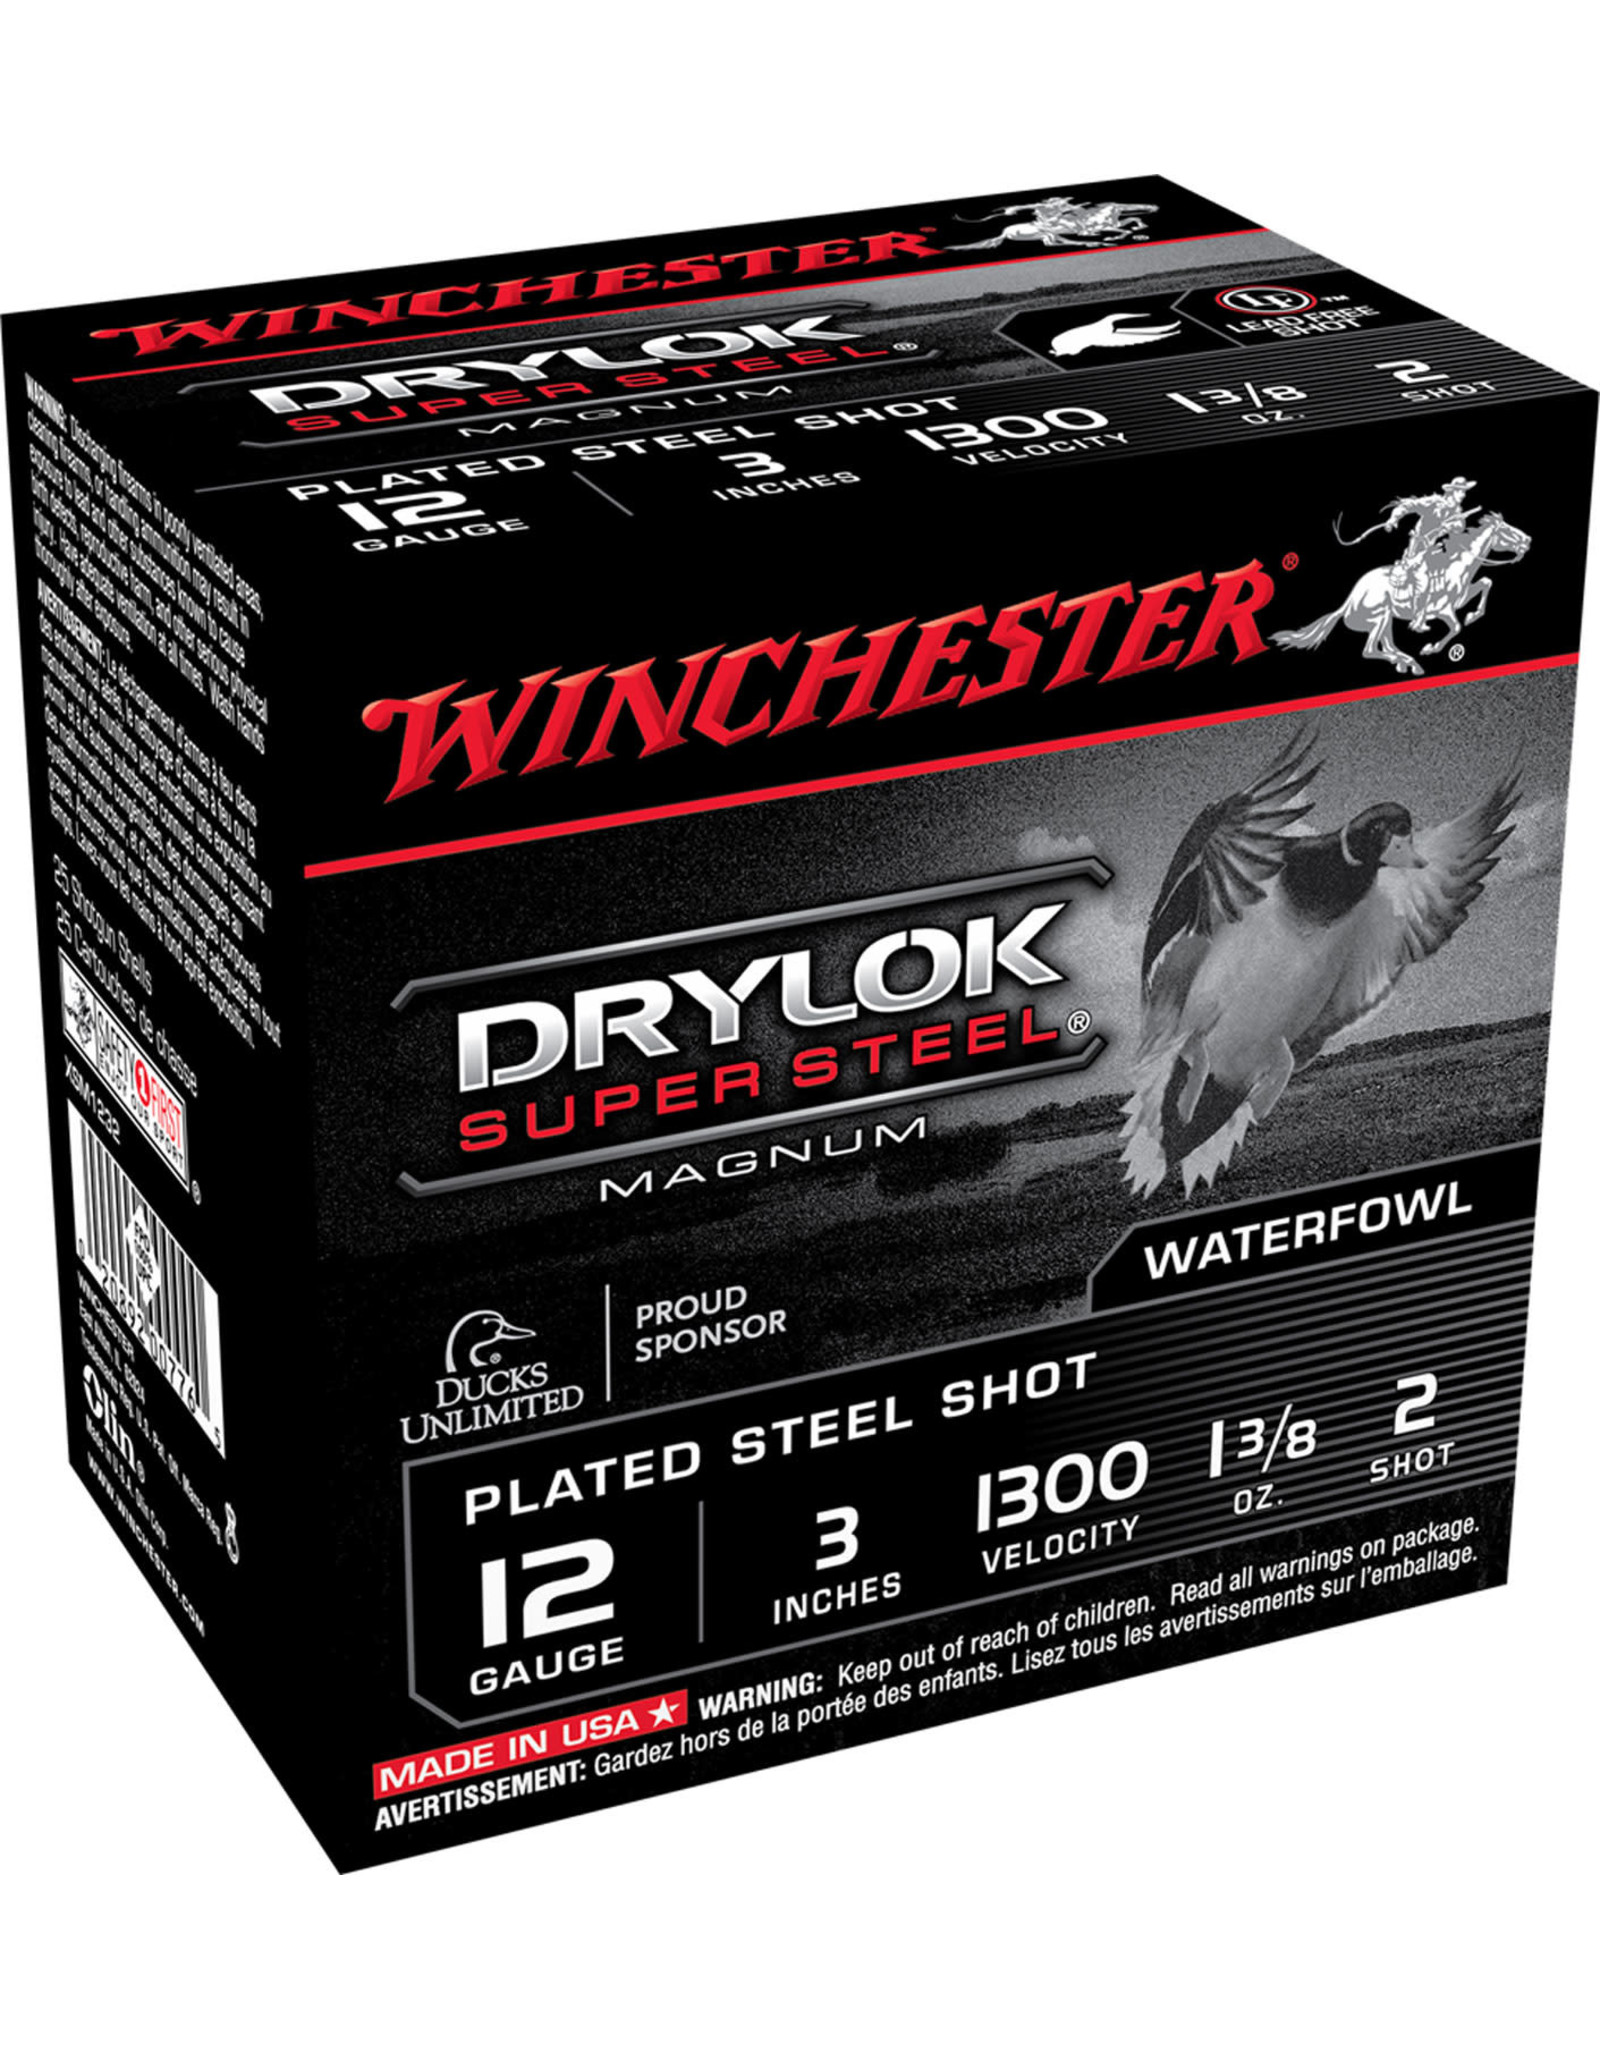 WINCHESTER AMMO Winchester Drylok 12 Ga 3" 1-3/8 Oz #2 1300 FPS - 25 Count